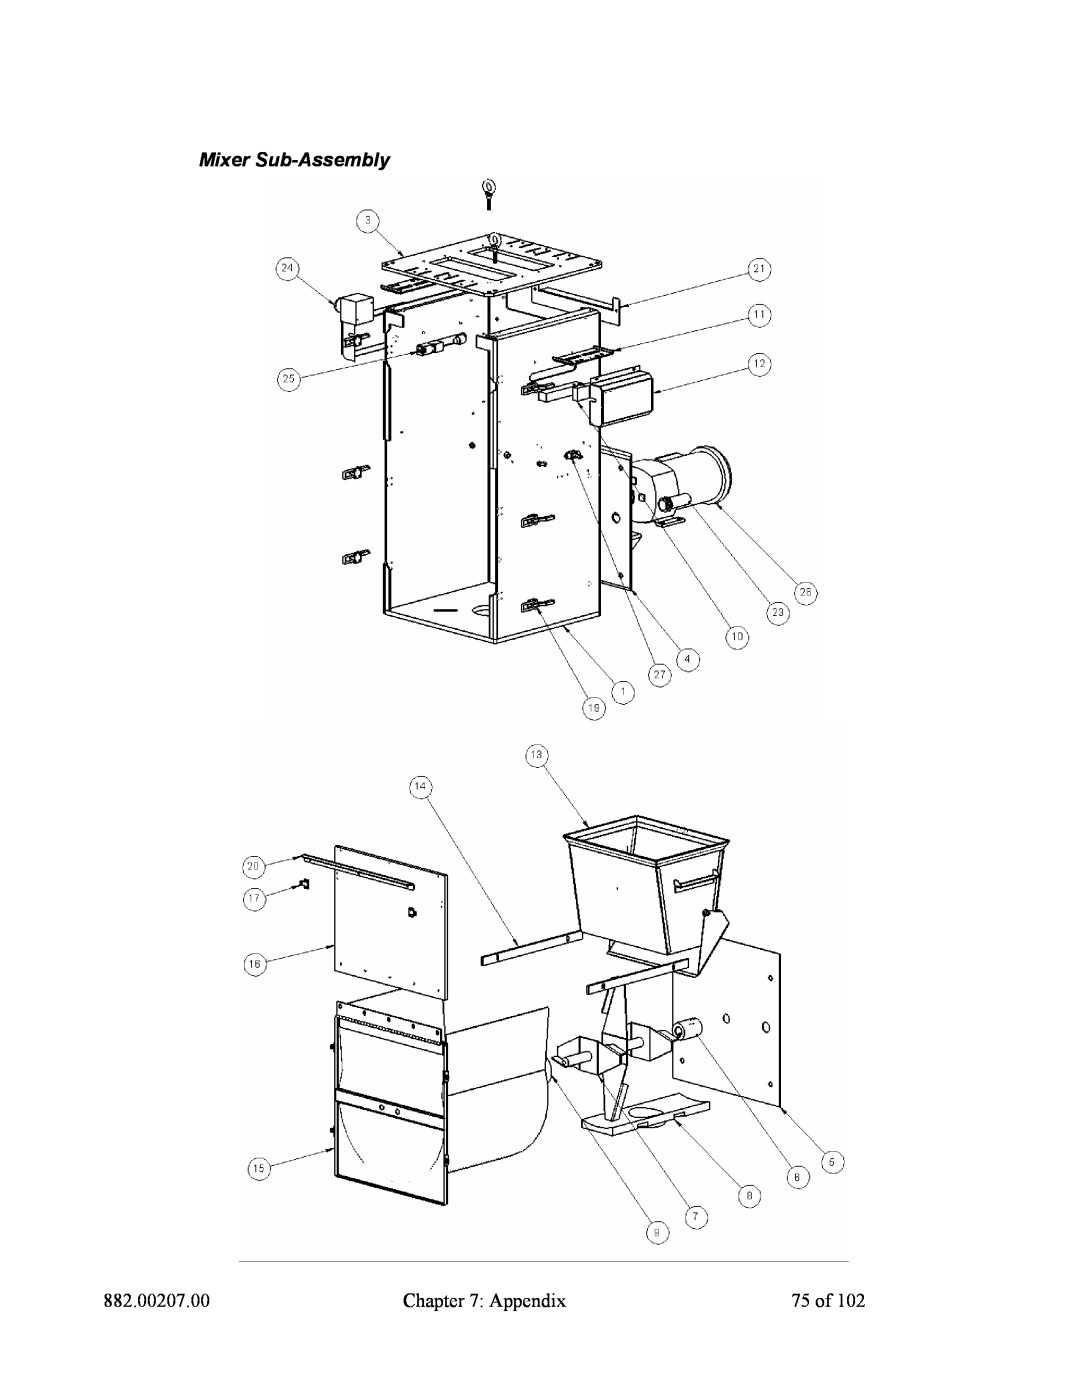 Mitsubishi Electronics 882.00207.00 specifications Mixer Sub-Assembly, Appendix, 75 of 